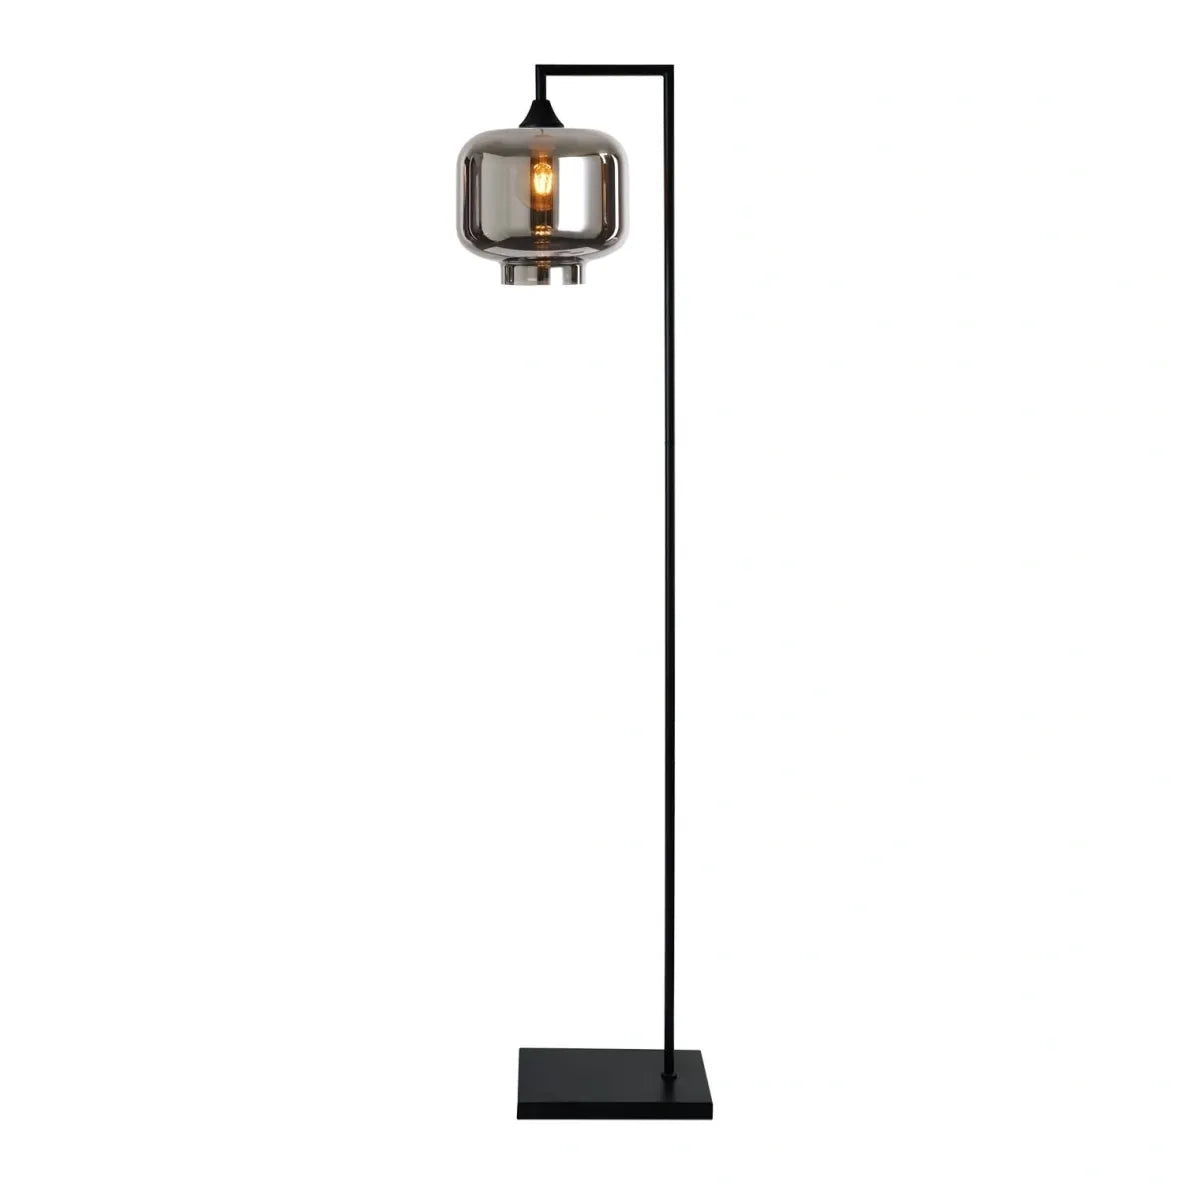 Murano Black Floor Lamp with Large Round Glass Shade